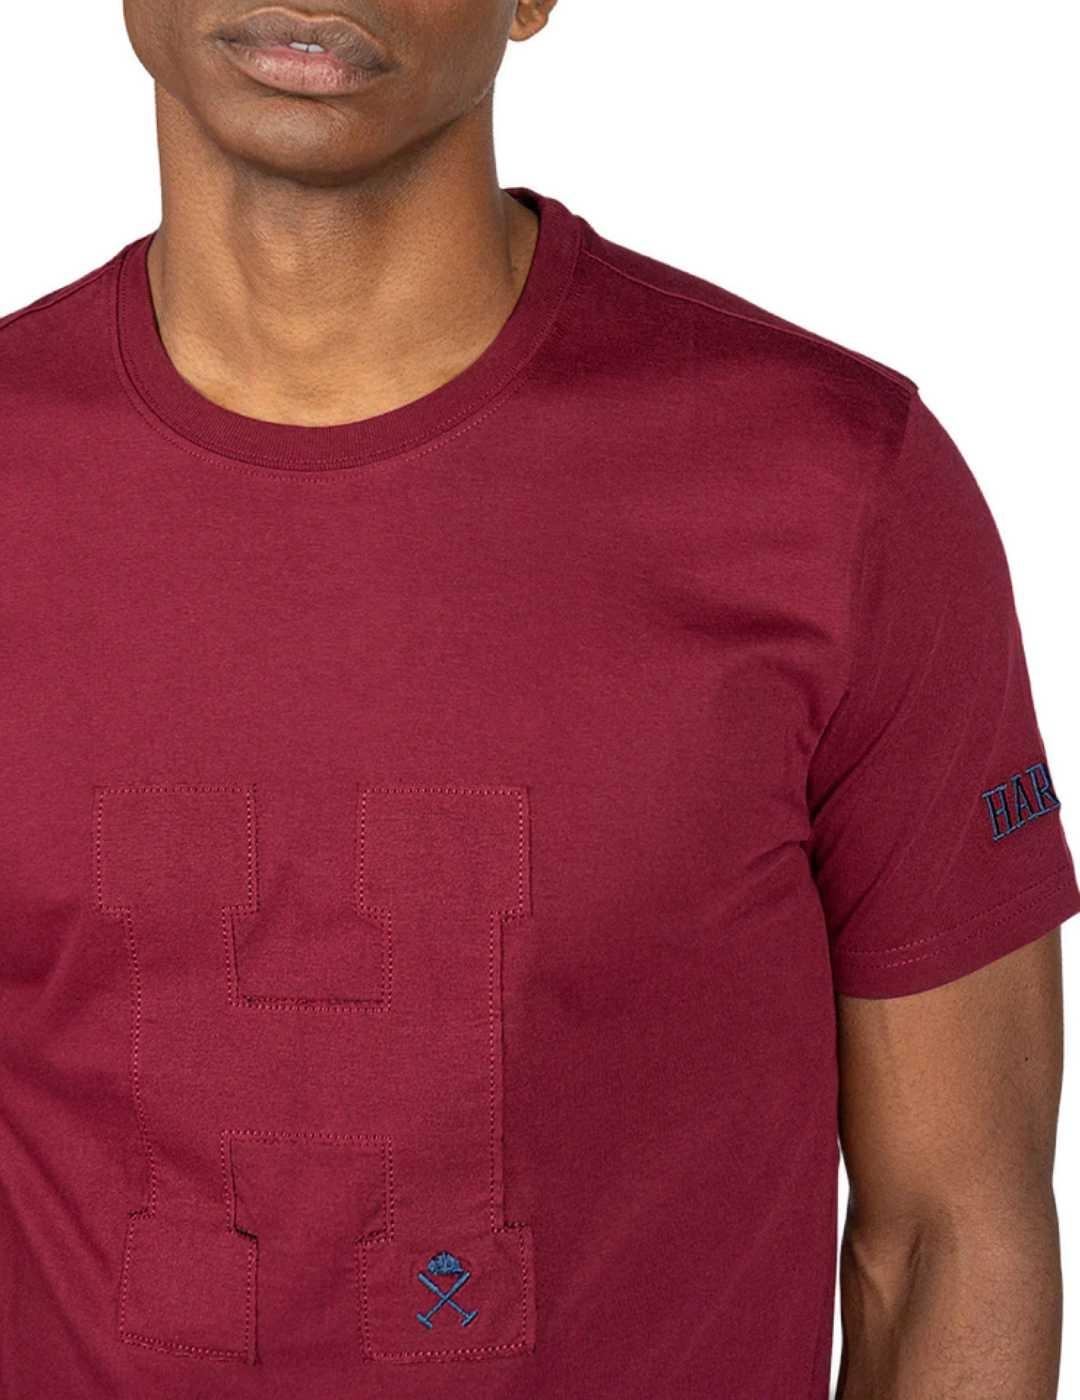 Camiseta Harper Harvard granate manga corta para hombre